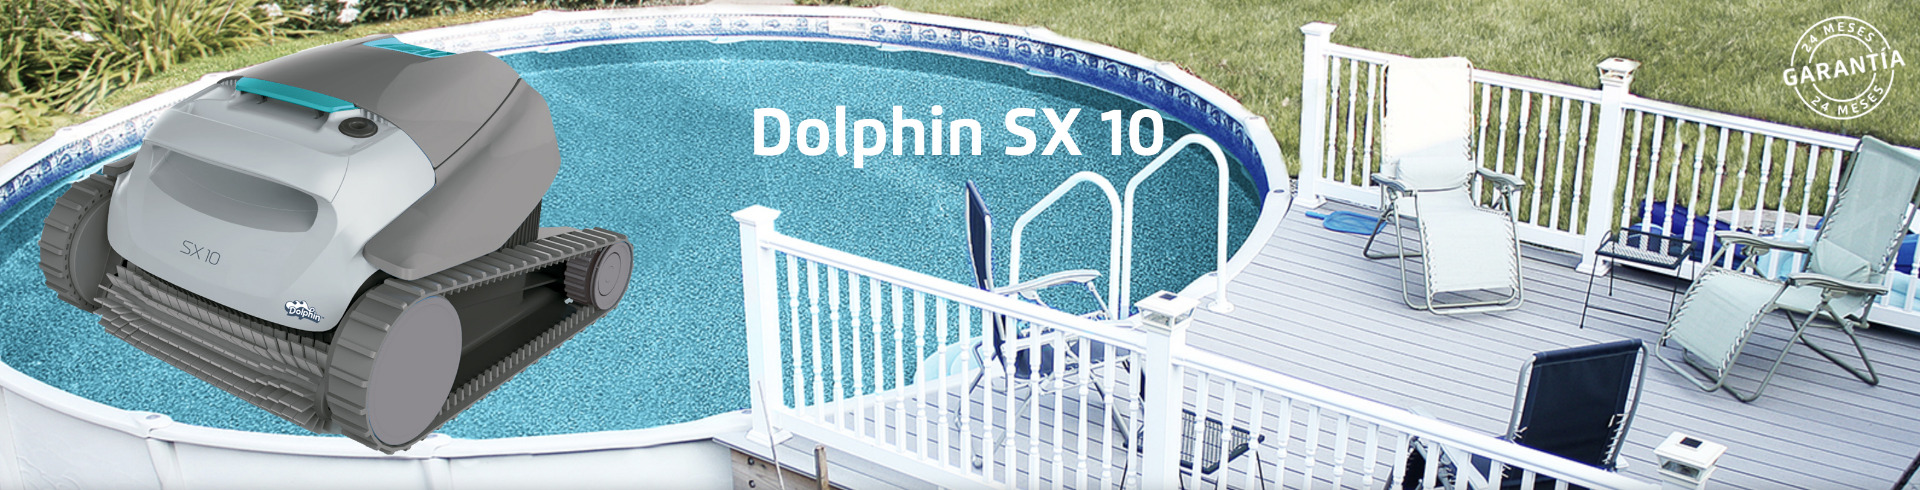 Dolphin SX10